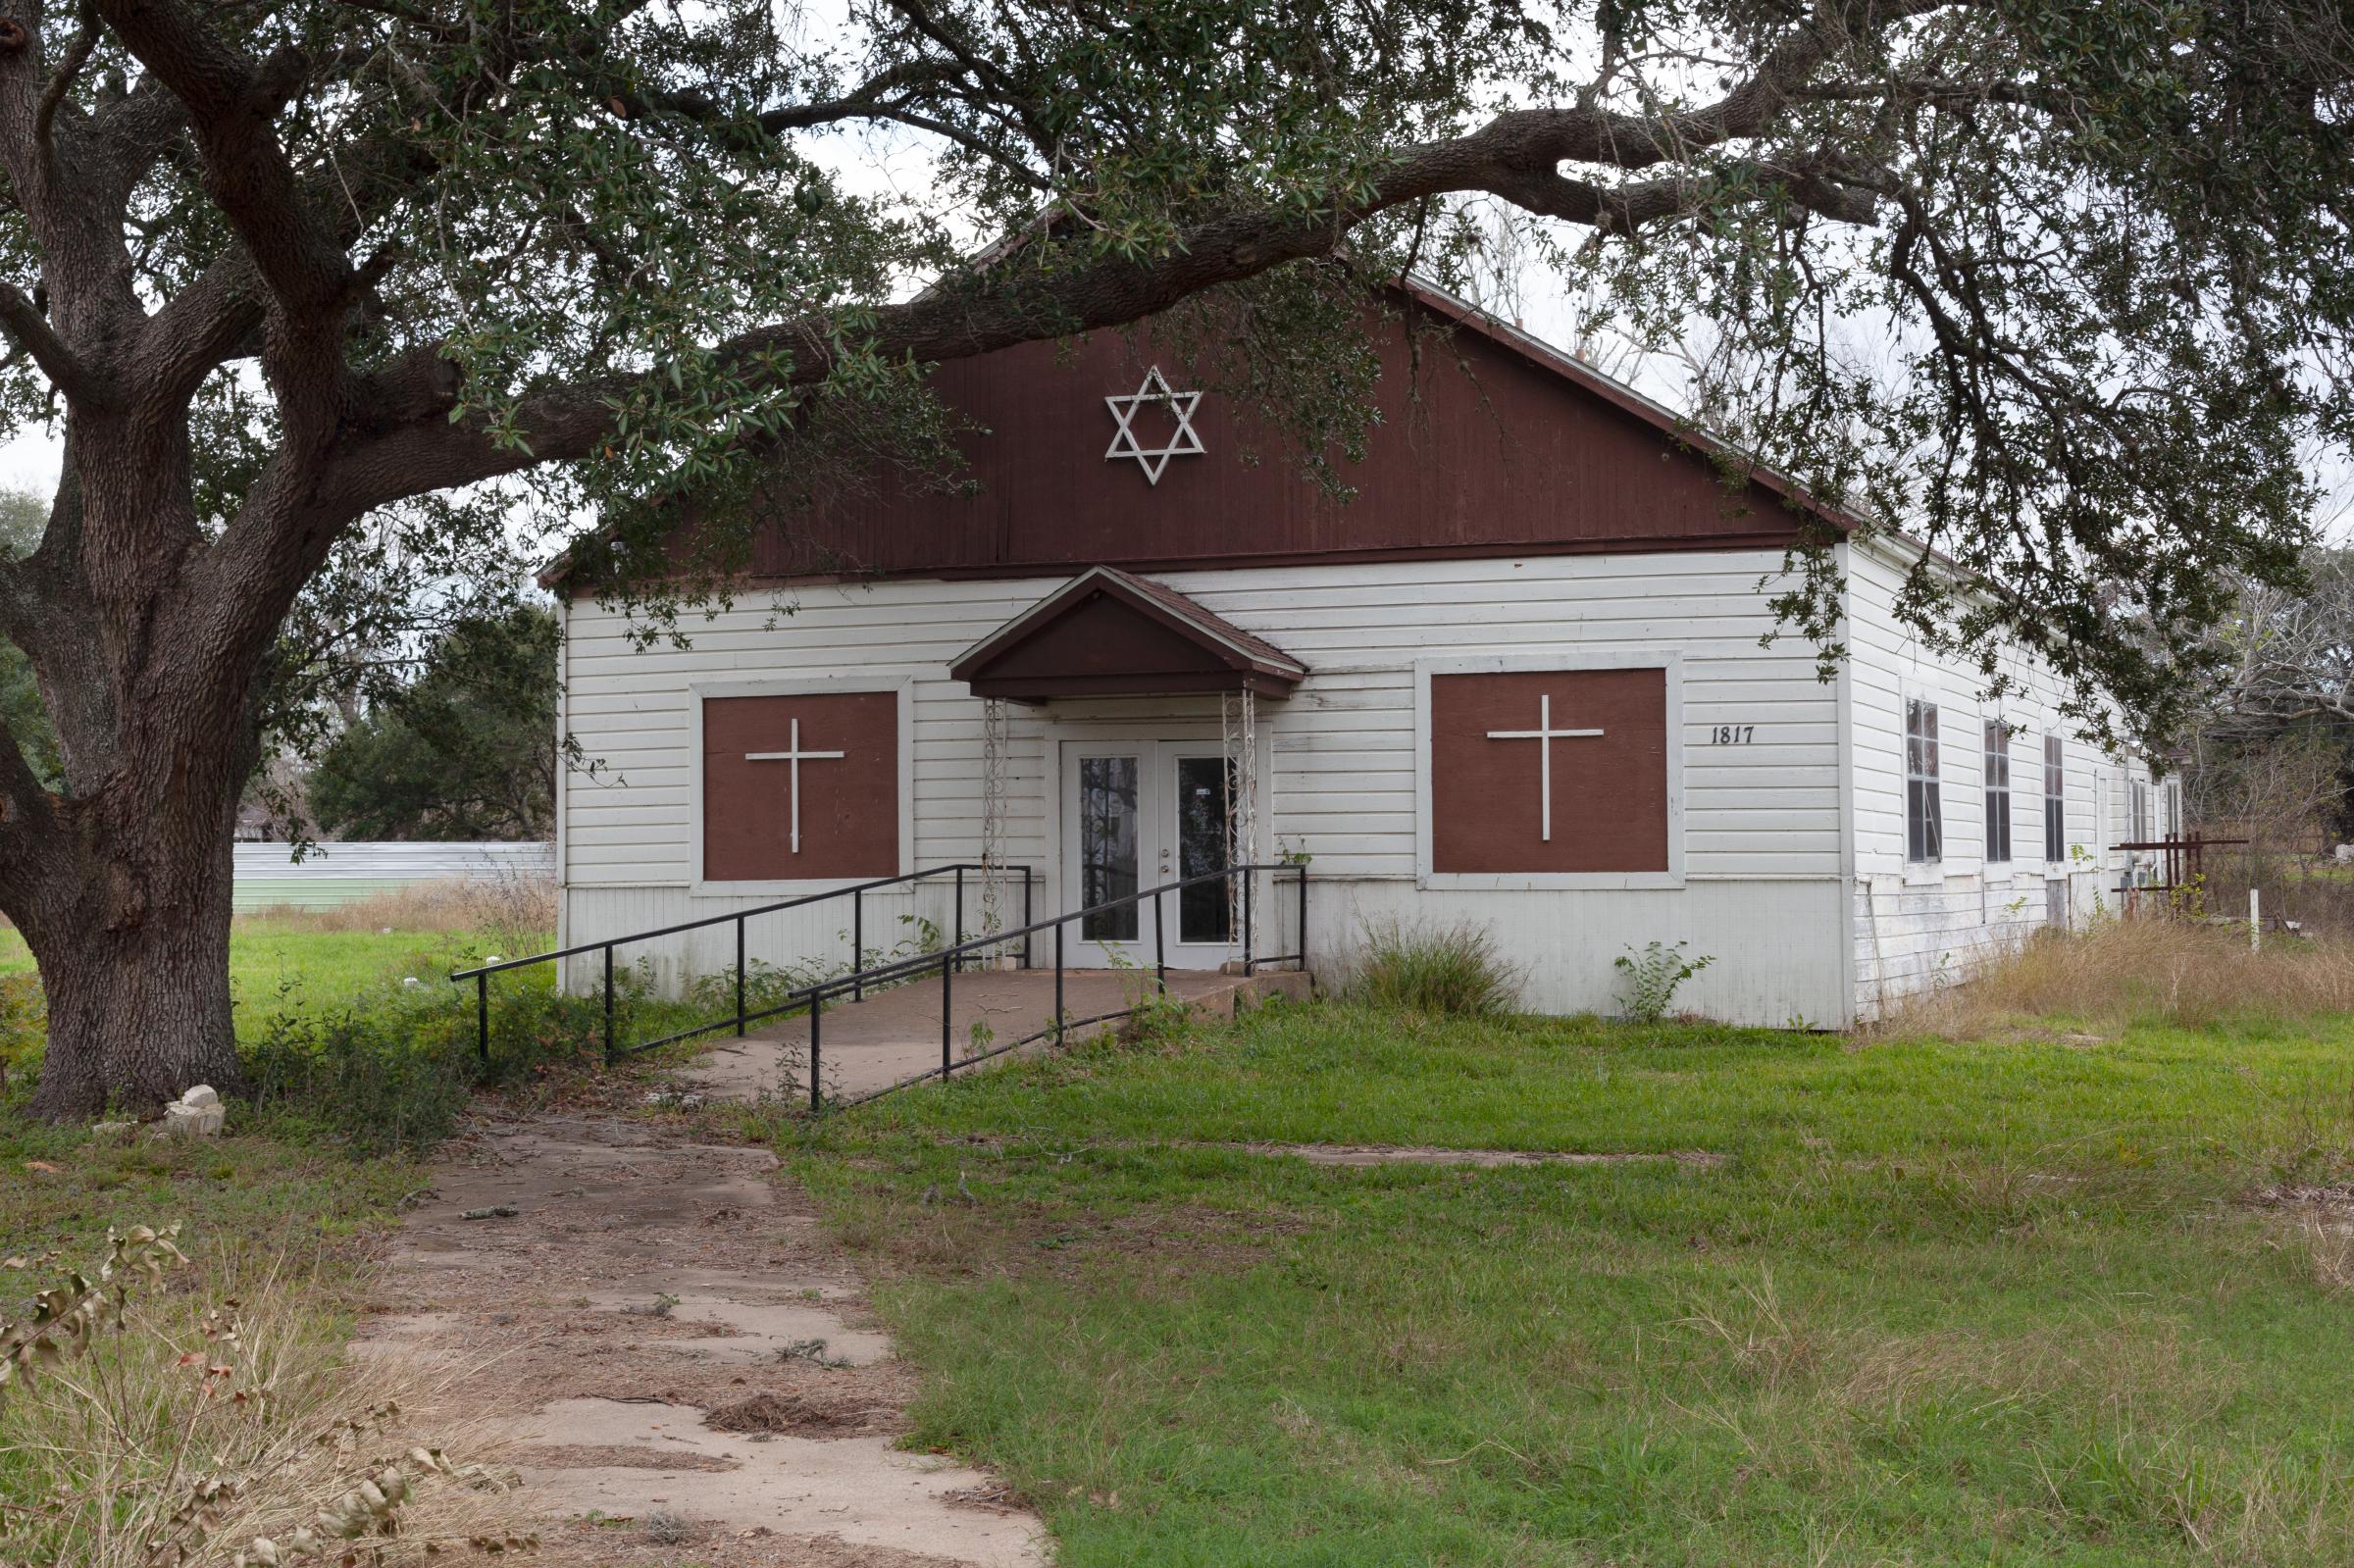 Texas - Former community building of Shearith Israel, Wharton, Texas